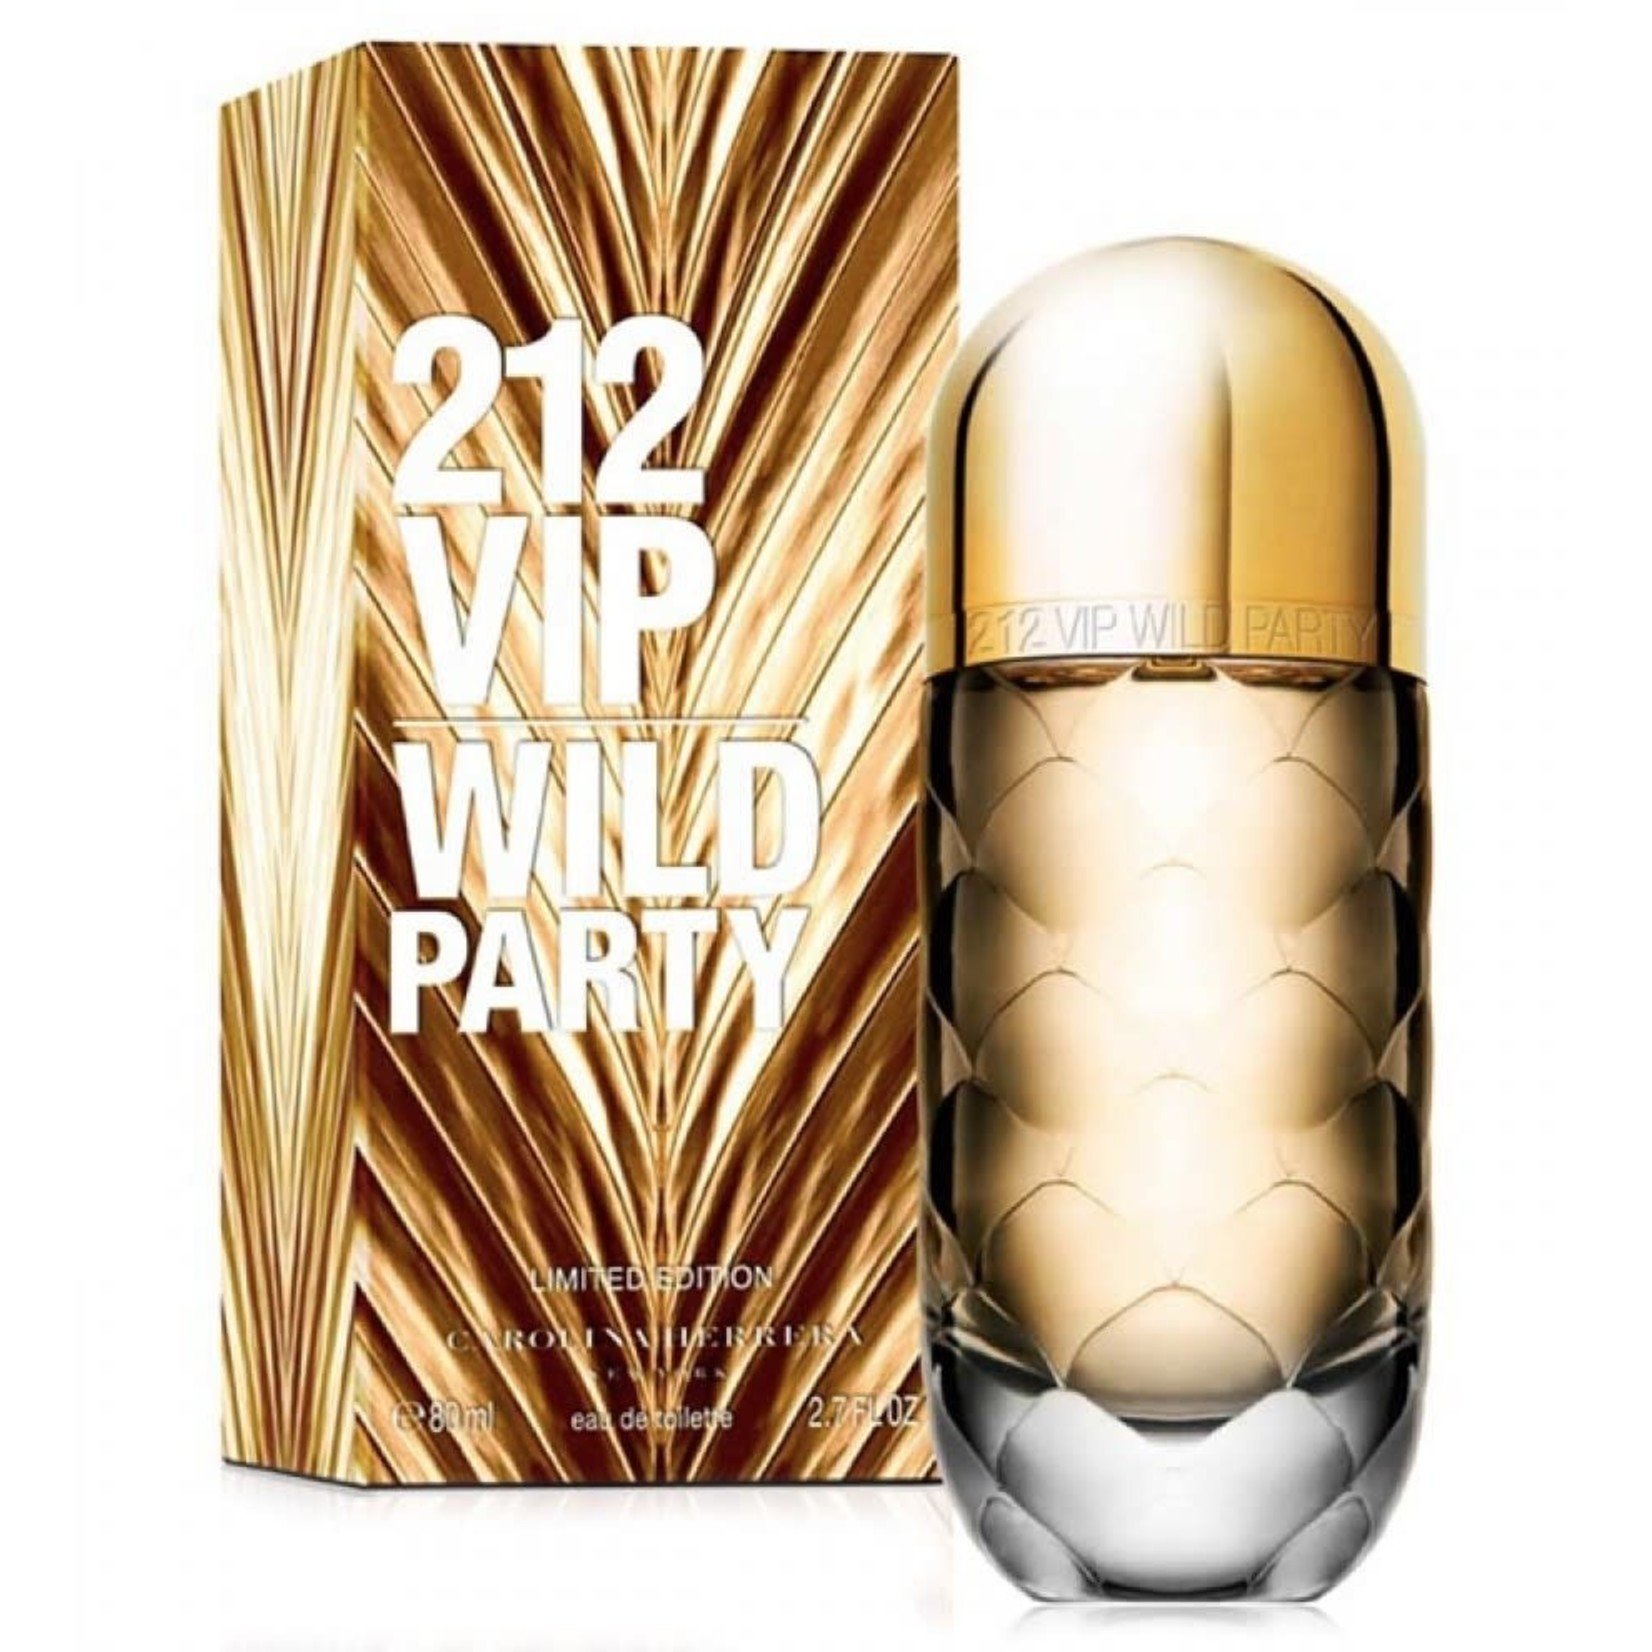 Carolina Herrera 212 VIP Wild Party for Women/Femme